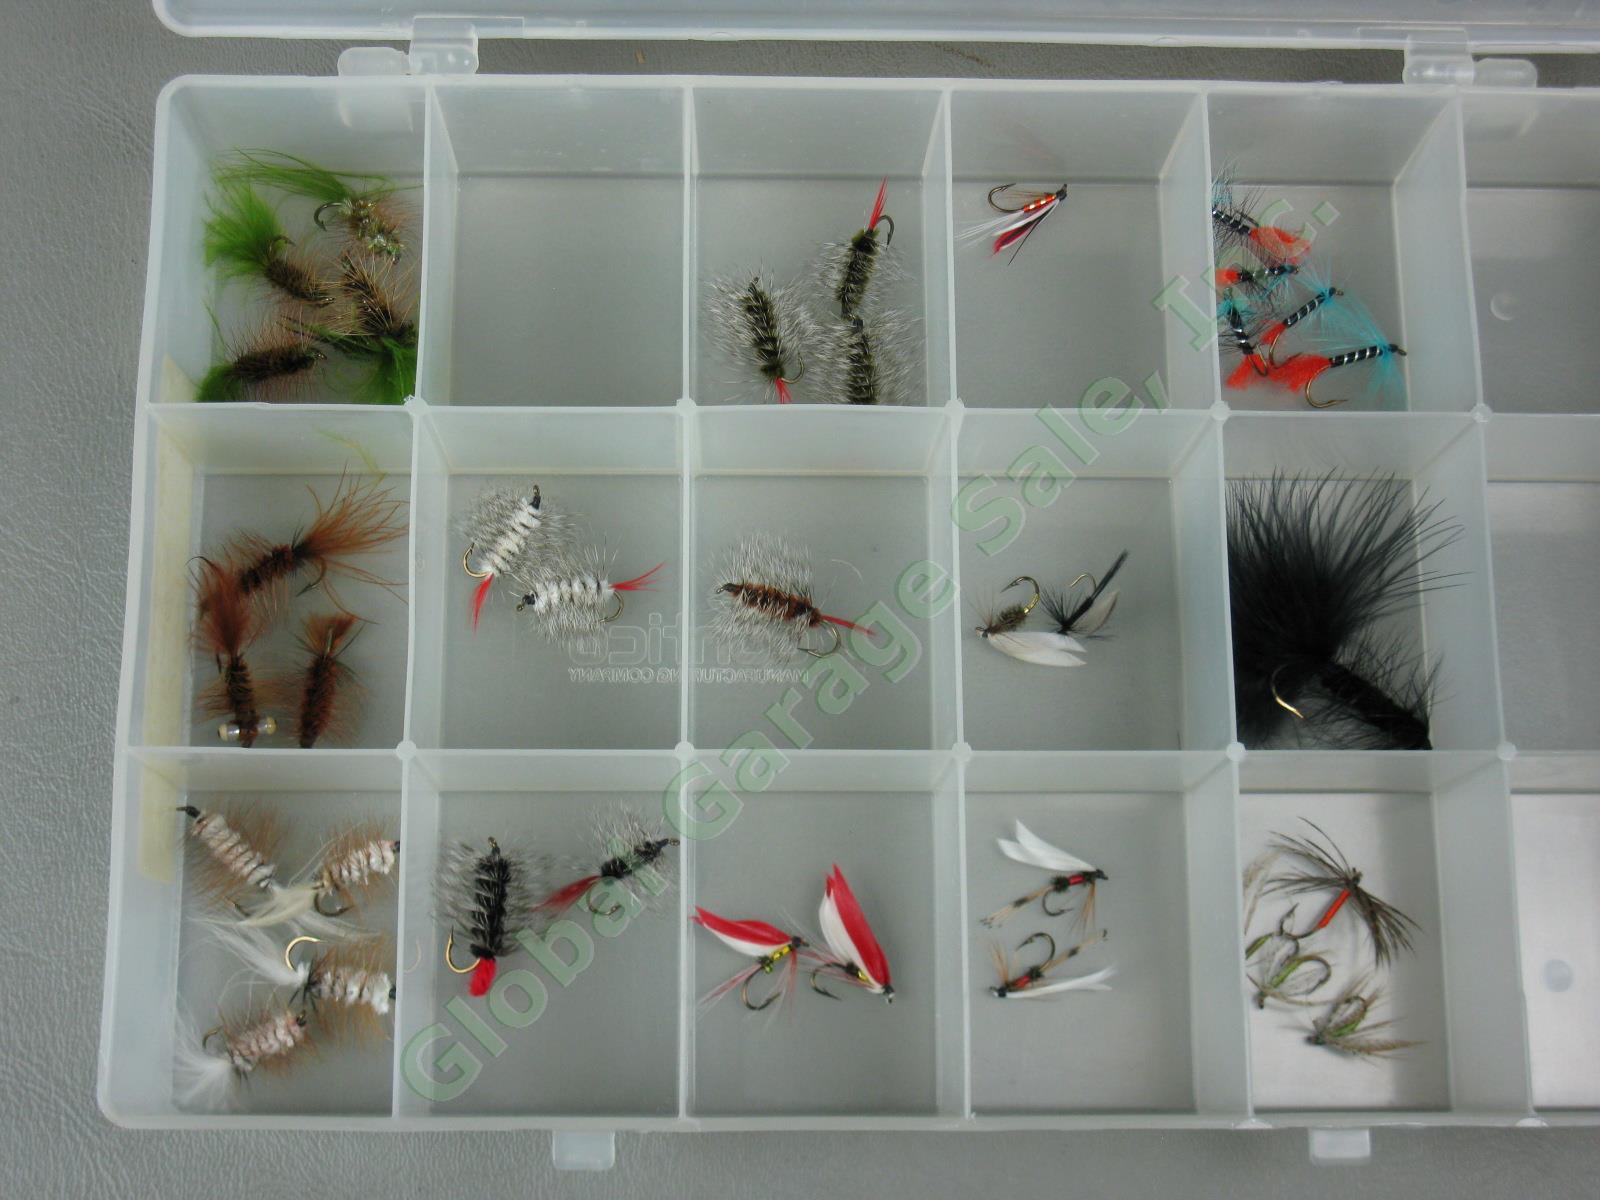 HUGE Lot 700+/- Fly Fishing Flies Trout Wet Dry Caddis Nymph w/ Cabelas Bag NR! 10